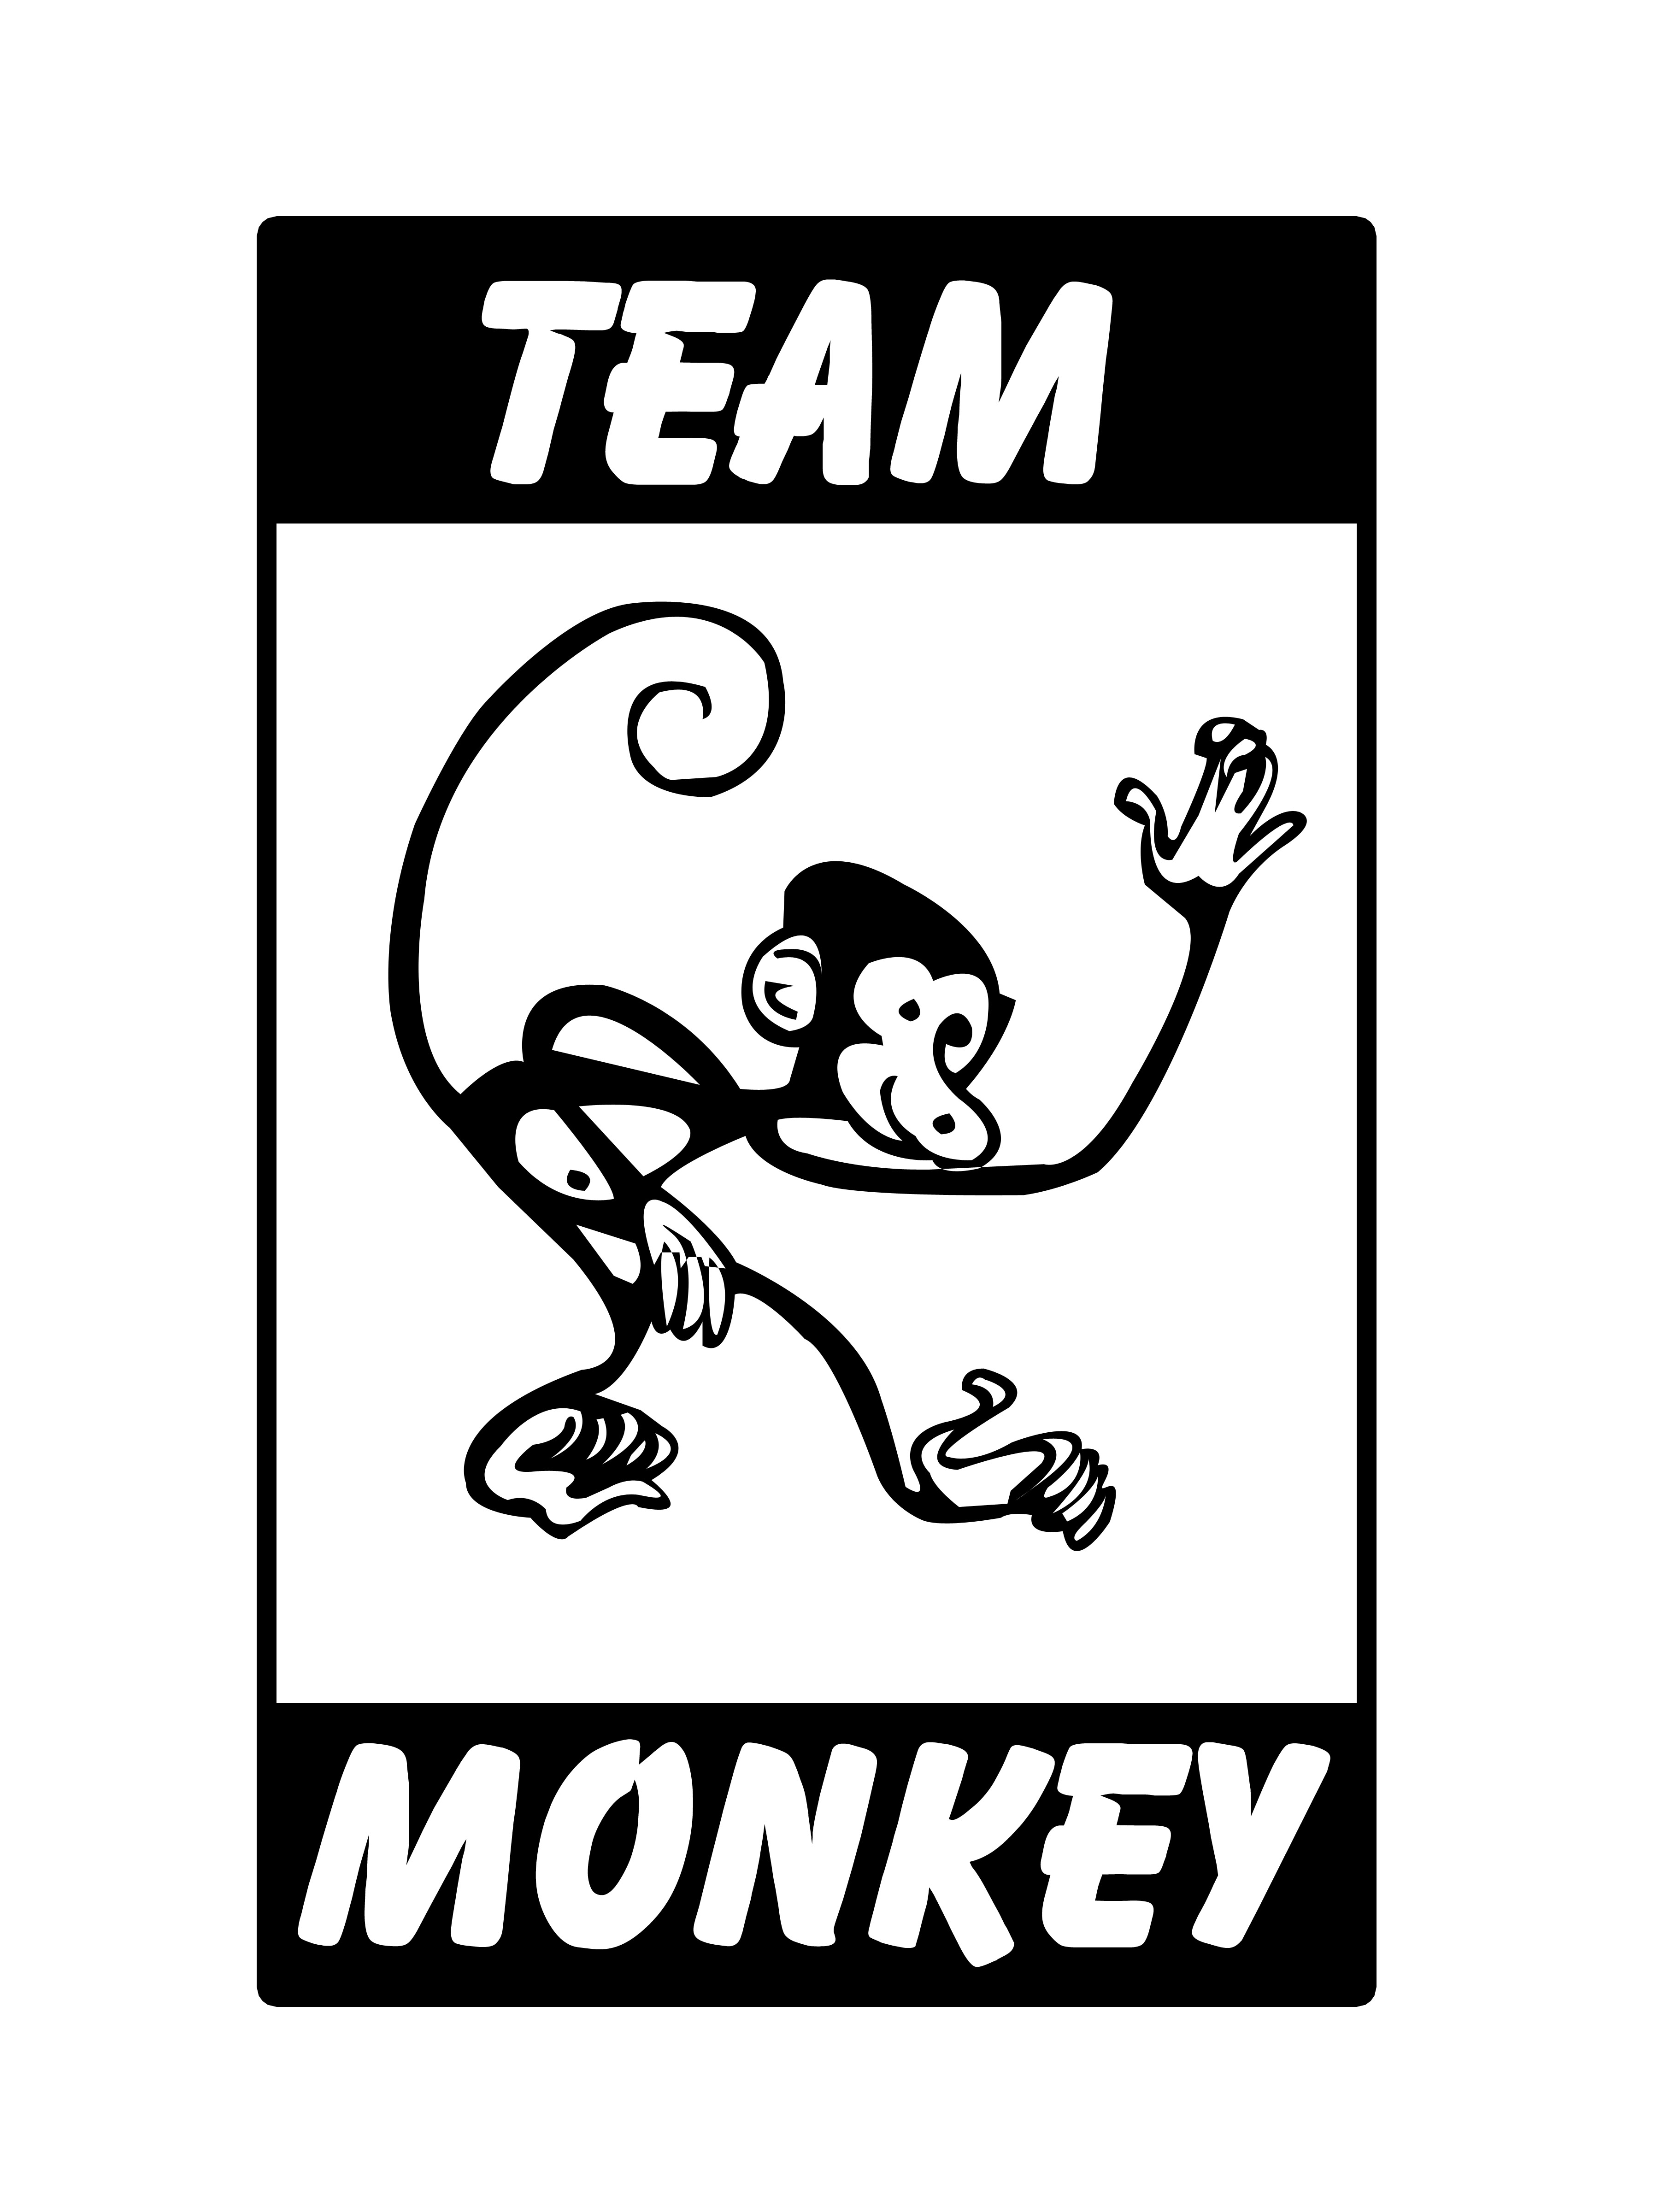 Team Monkey - T-shirt design